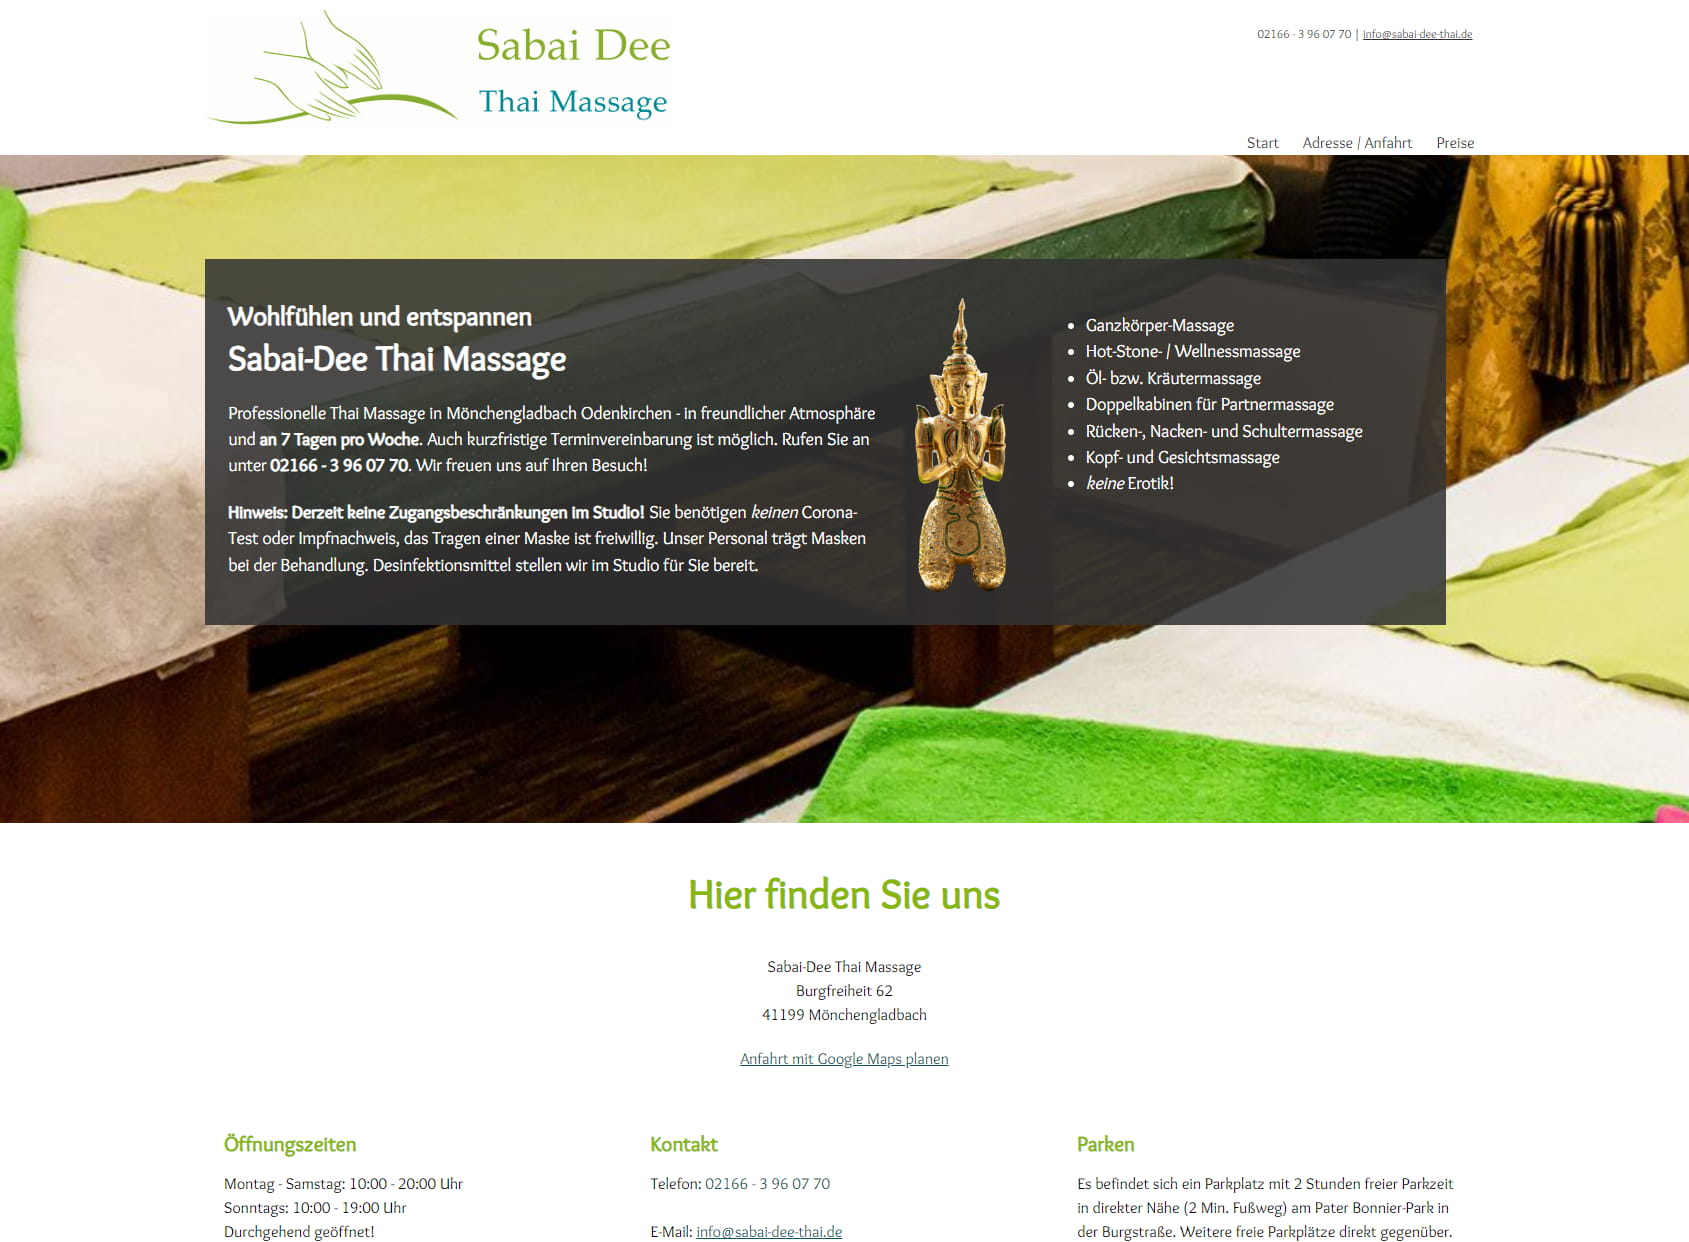 Sabai Dee Thai Massage